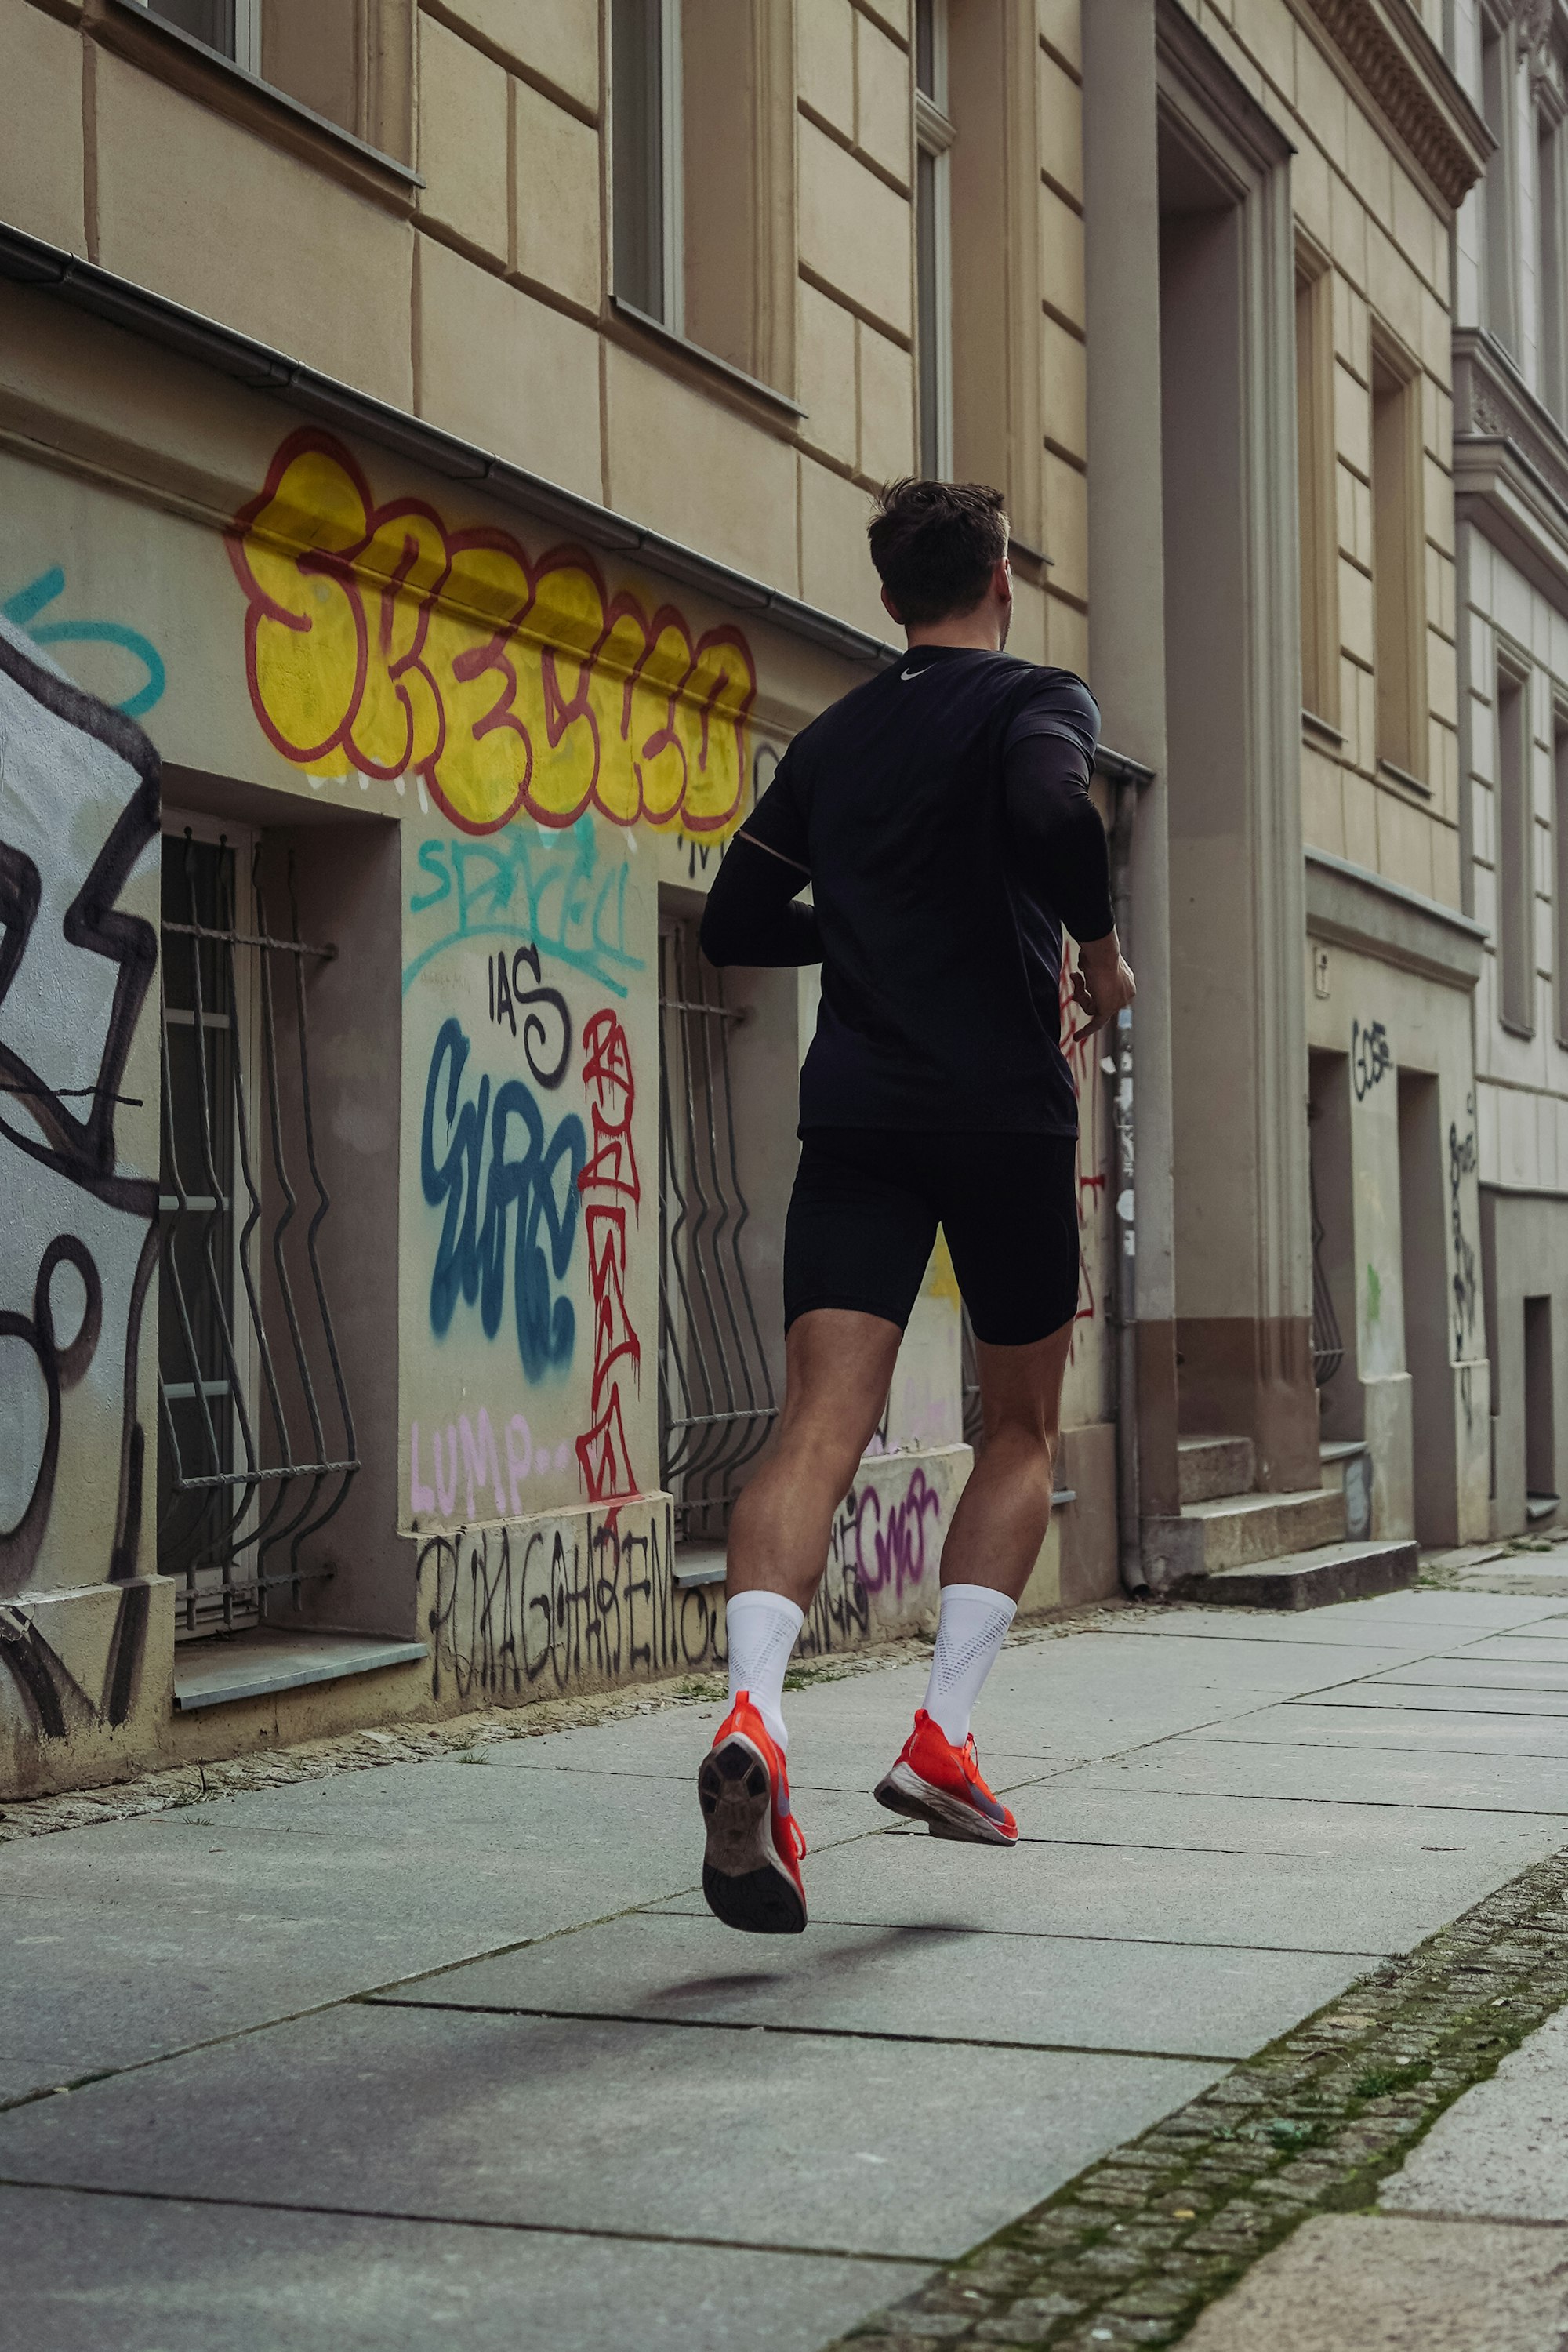 Man in compression shorts running on sidewalk